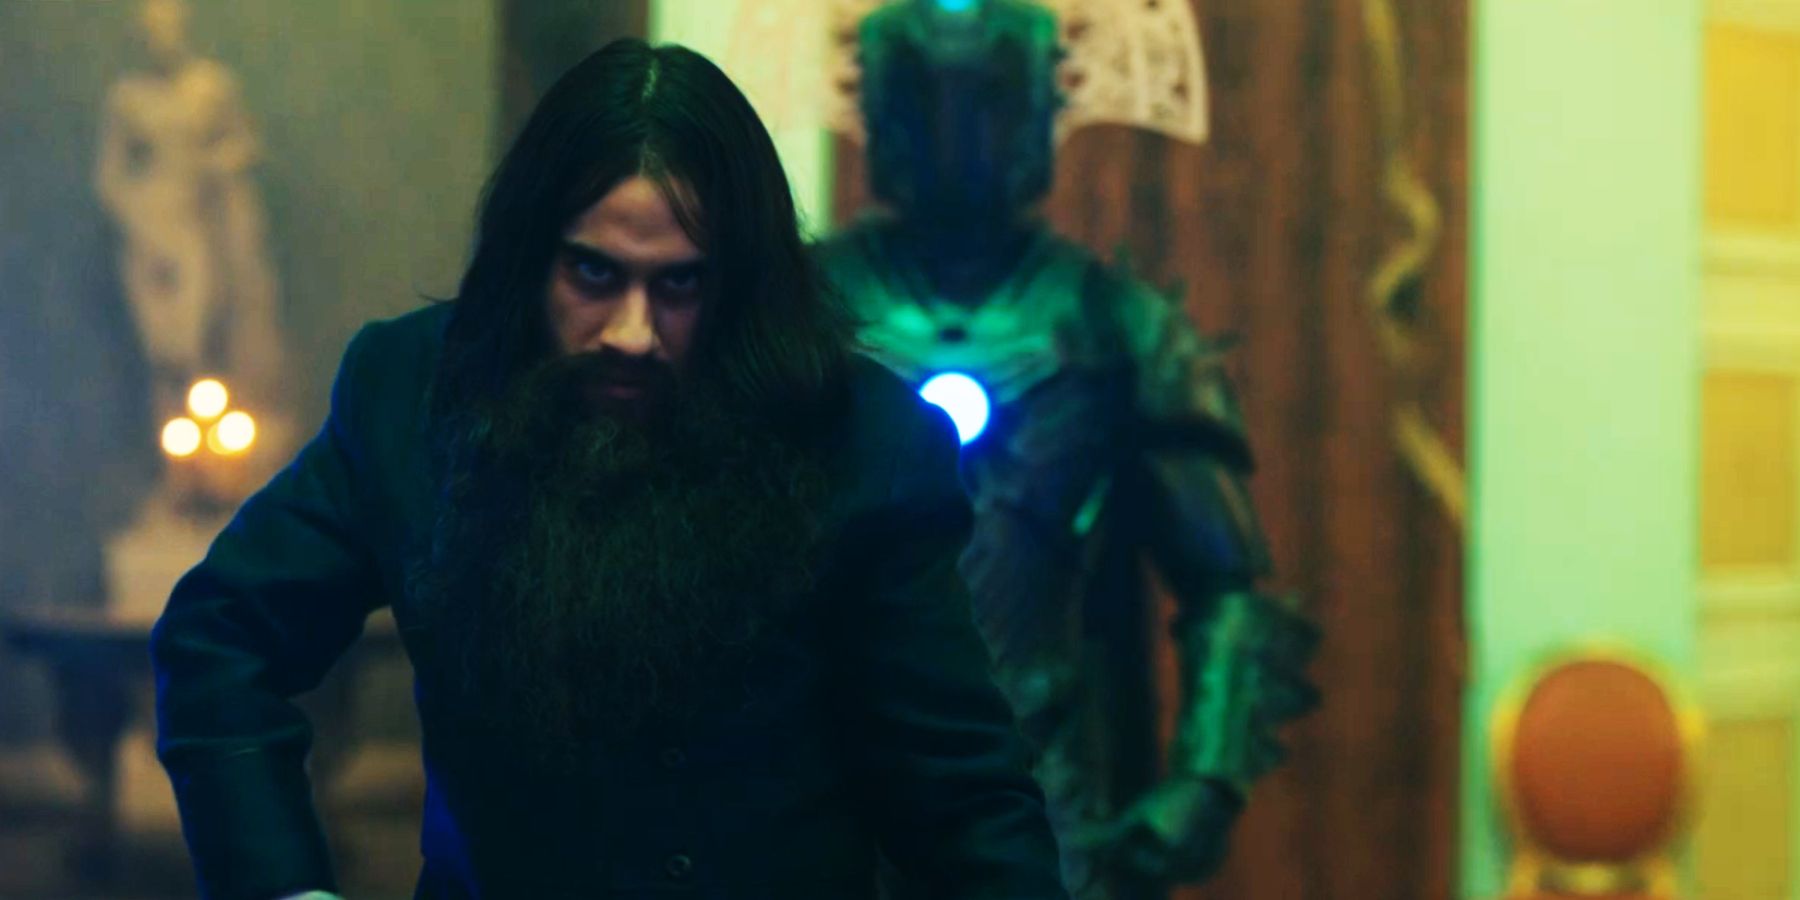 Sacha Dhawan as the Master, disguised as Rasputin in Doctor Who